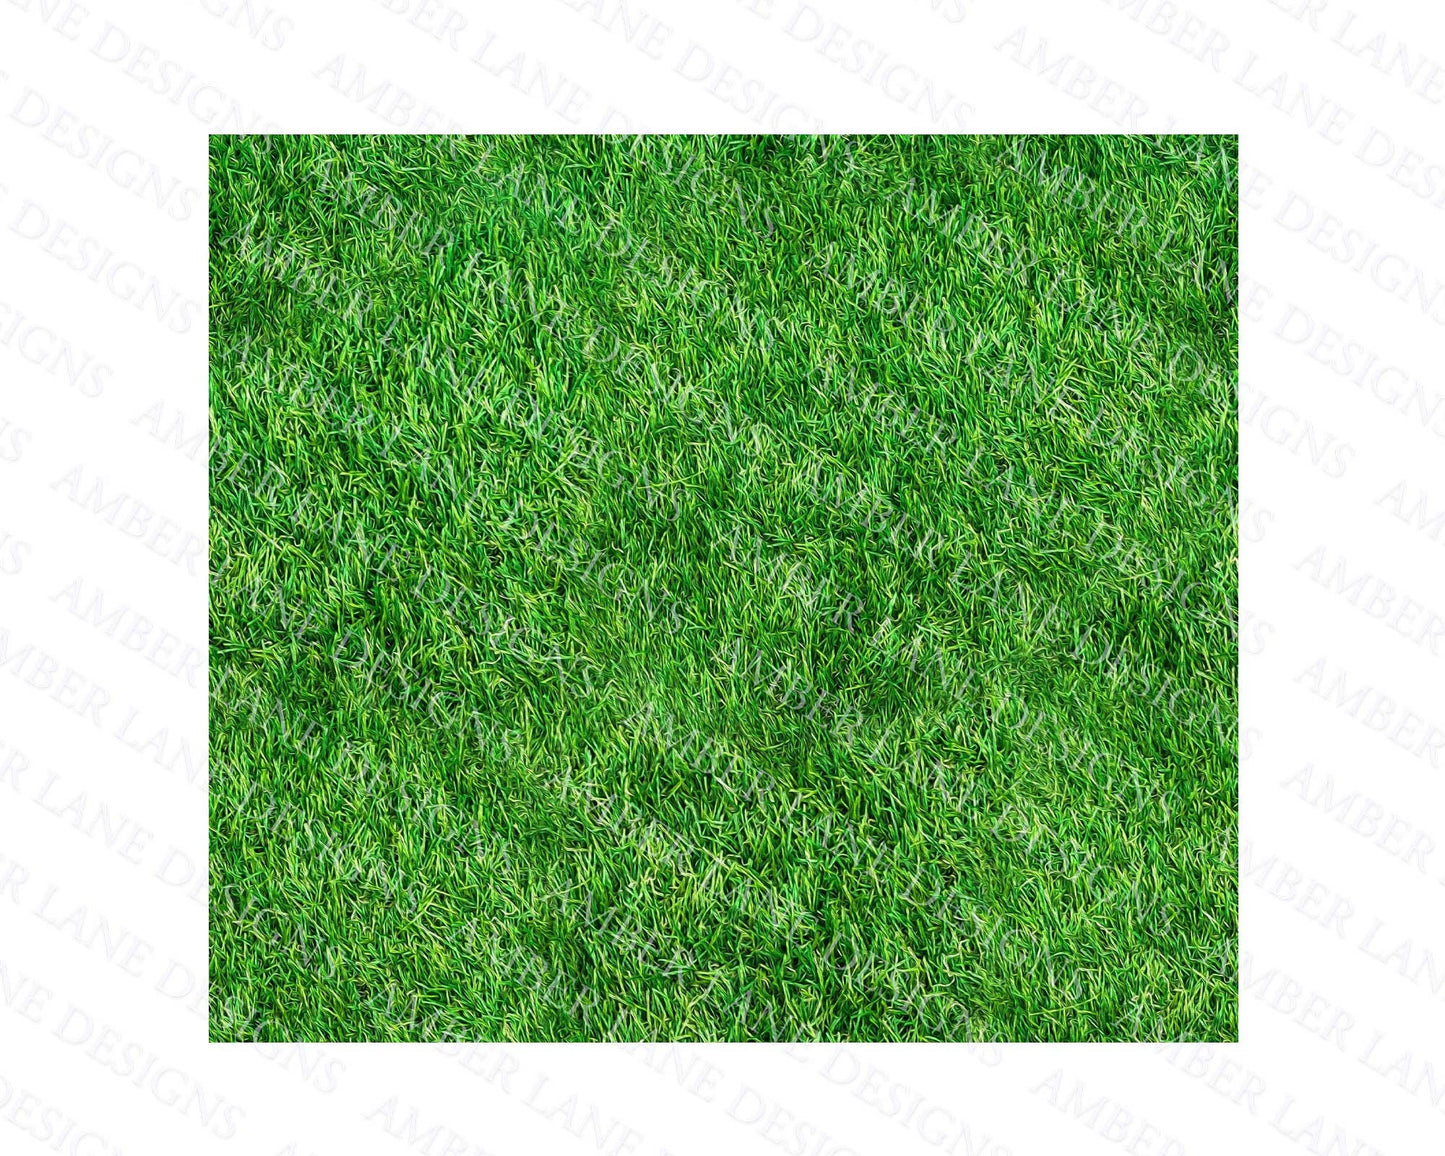 Grass Lawn  20oz SKINNY TUMBLER straight wrap 1 jpeg file